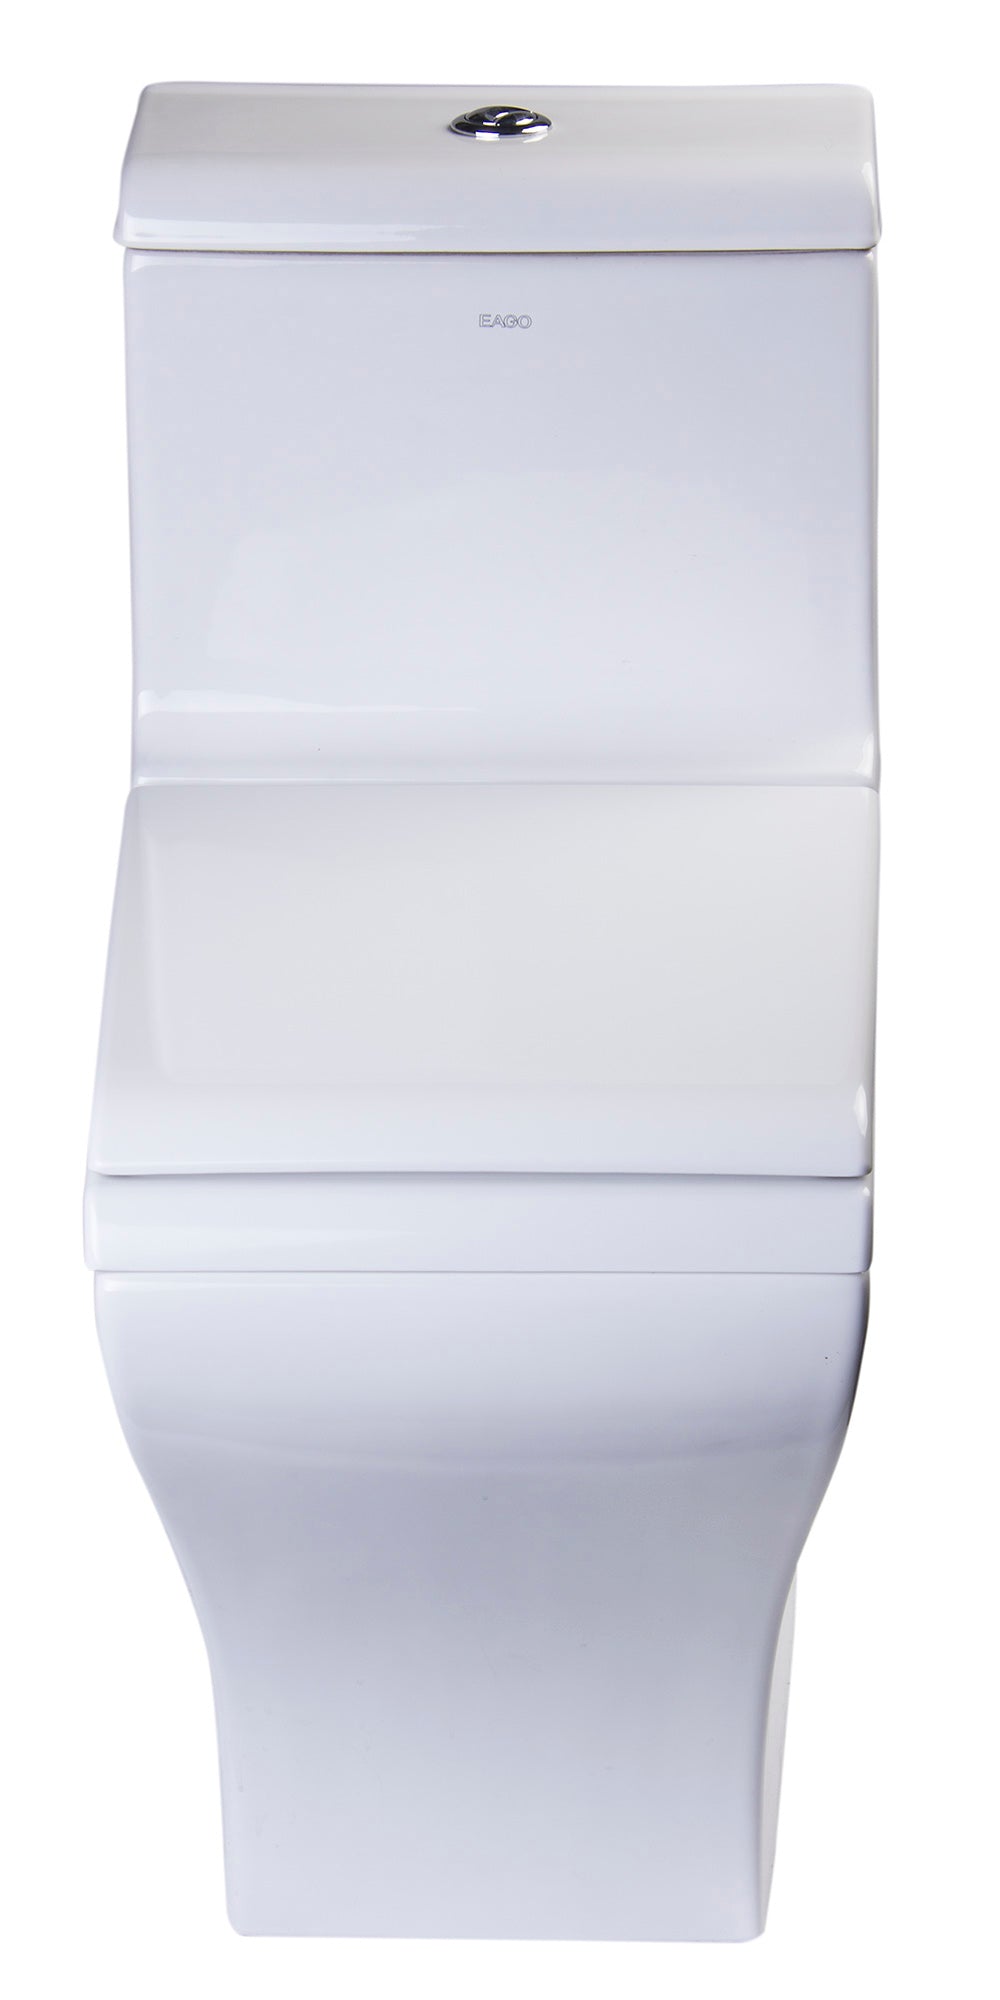 EAGO TB356 Eco-Friendly Toilet Dual-Flush High Efficiency Low Flush White